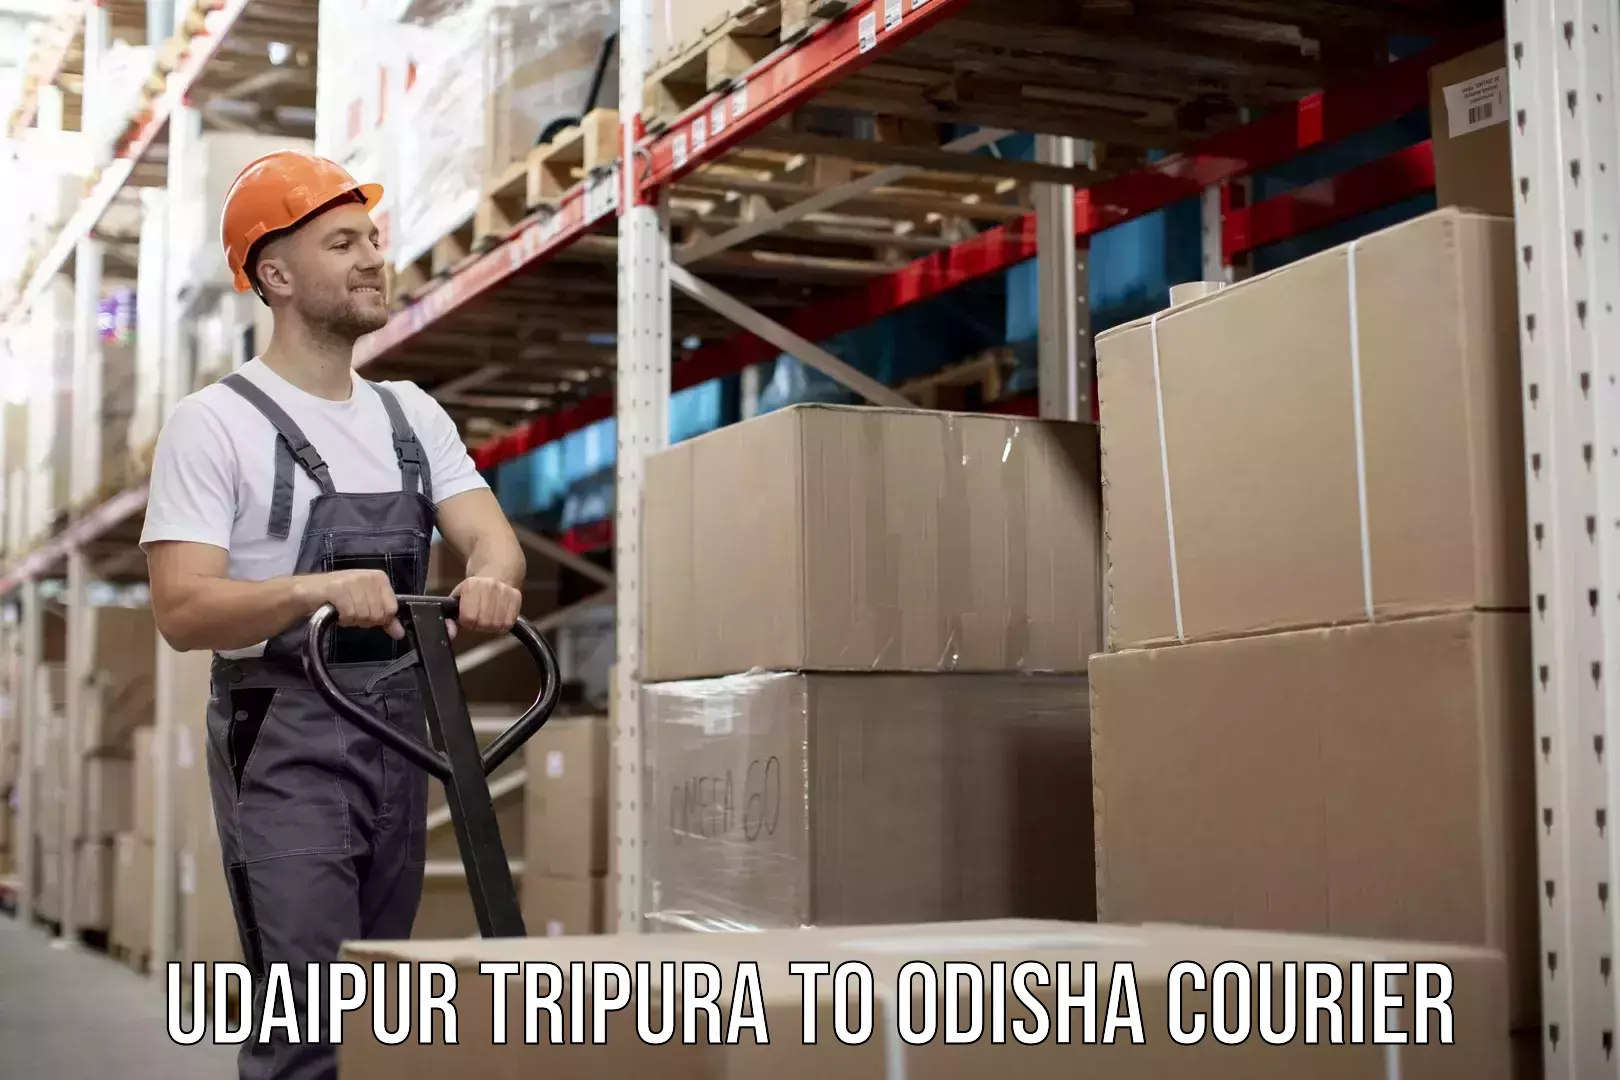 Tech-enabled shipping Udaipur Tripura to Odisha